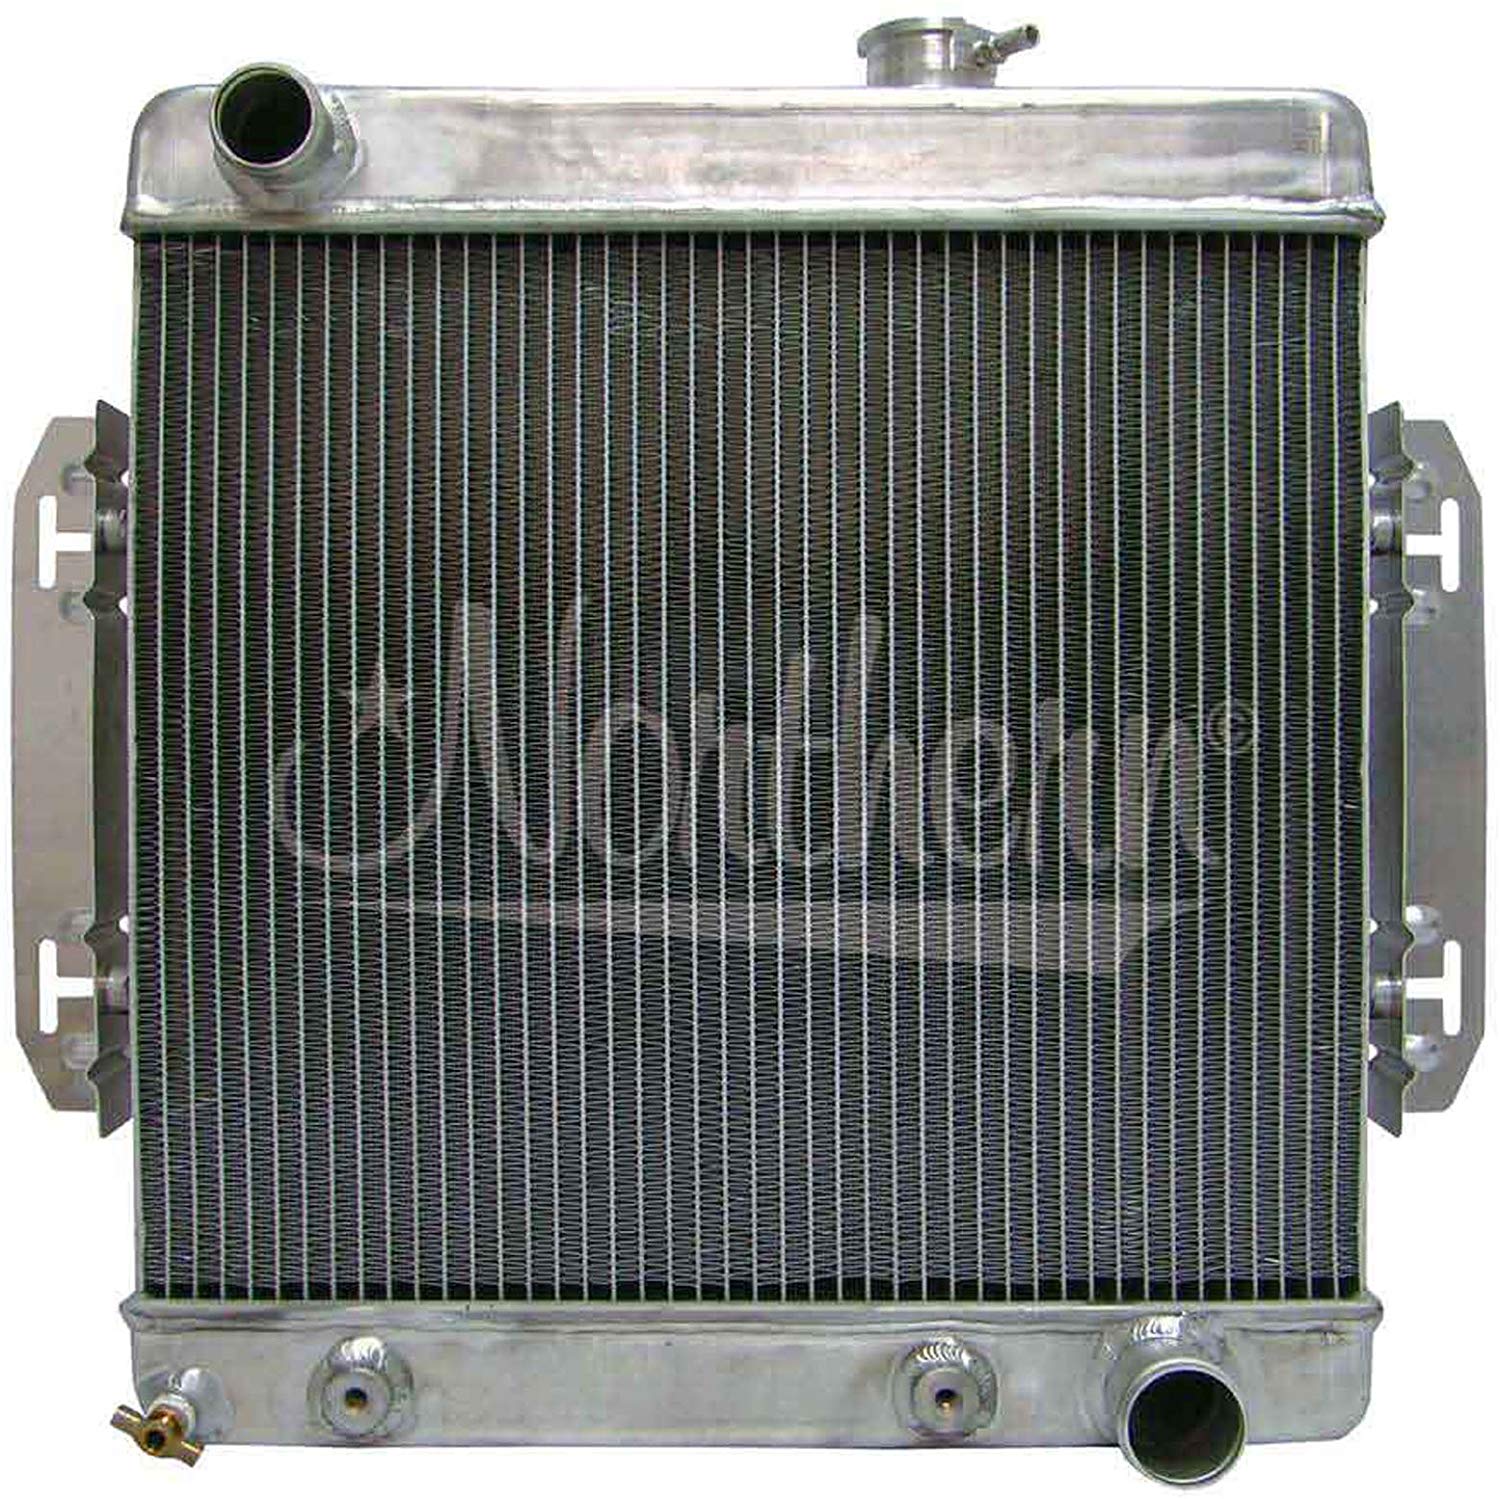 Northern Radiator 205156 Radiator